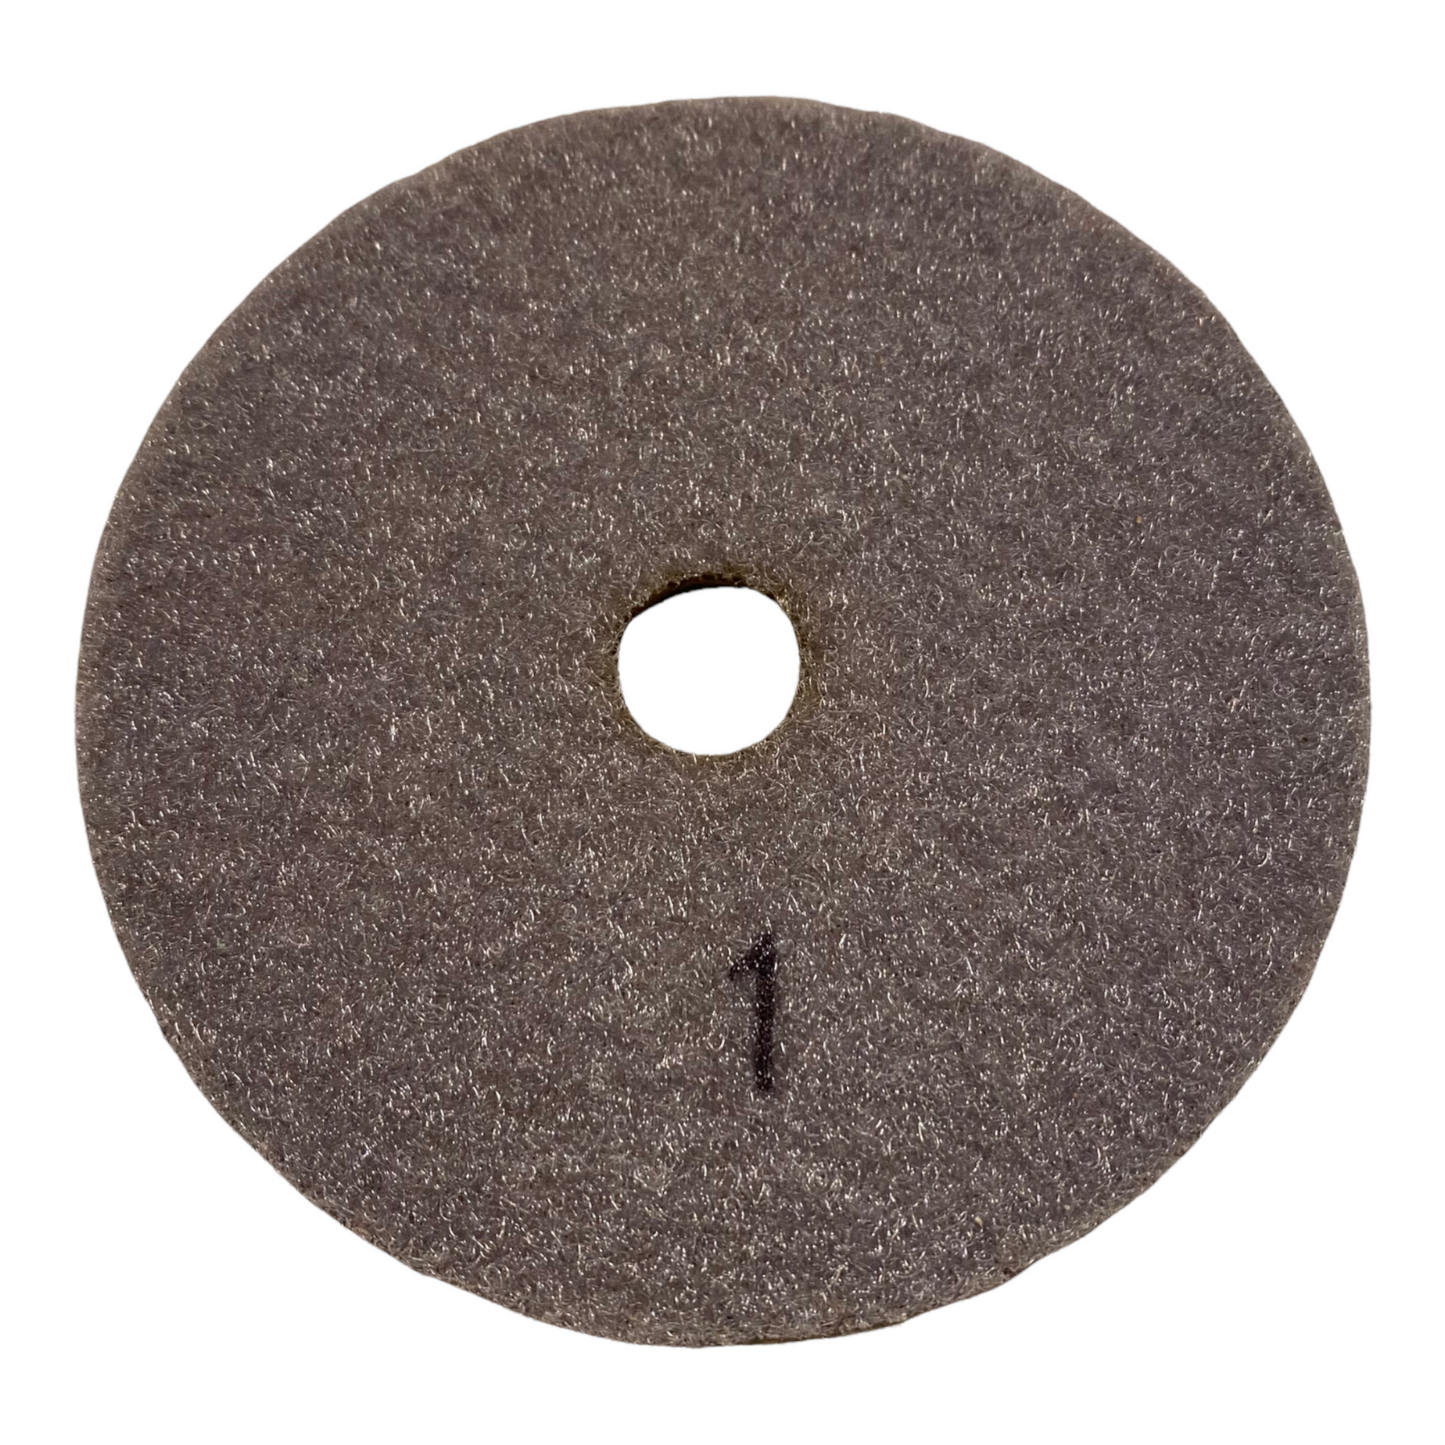 4” Diamond Polishing Pads Wet/Dry For Granite Quartz Marble Stone - Step 1, 2, 3